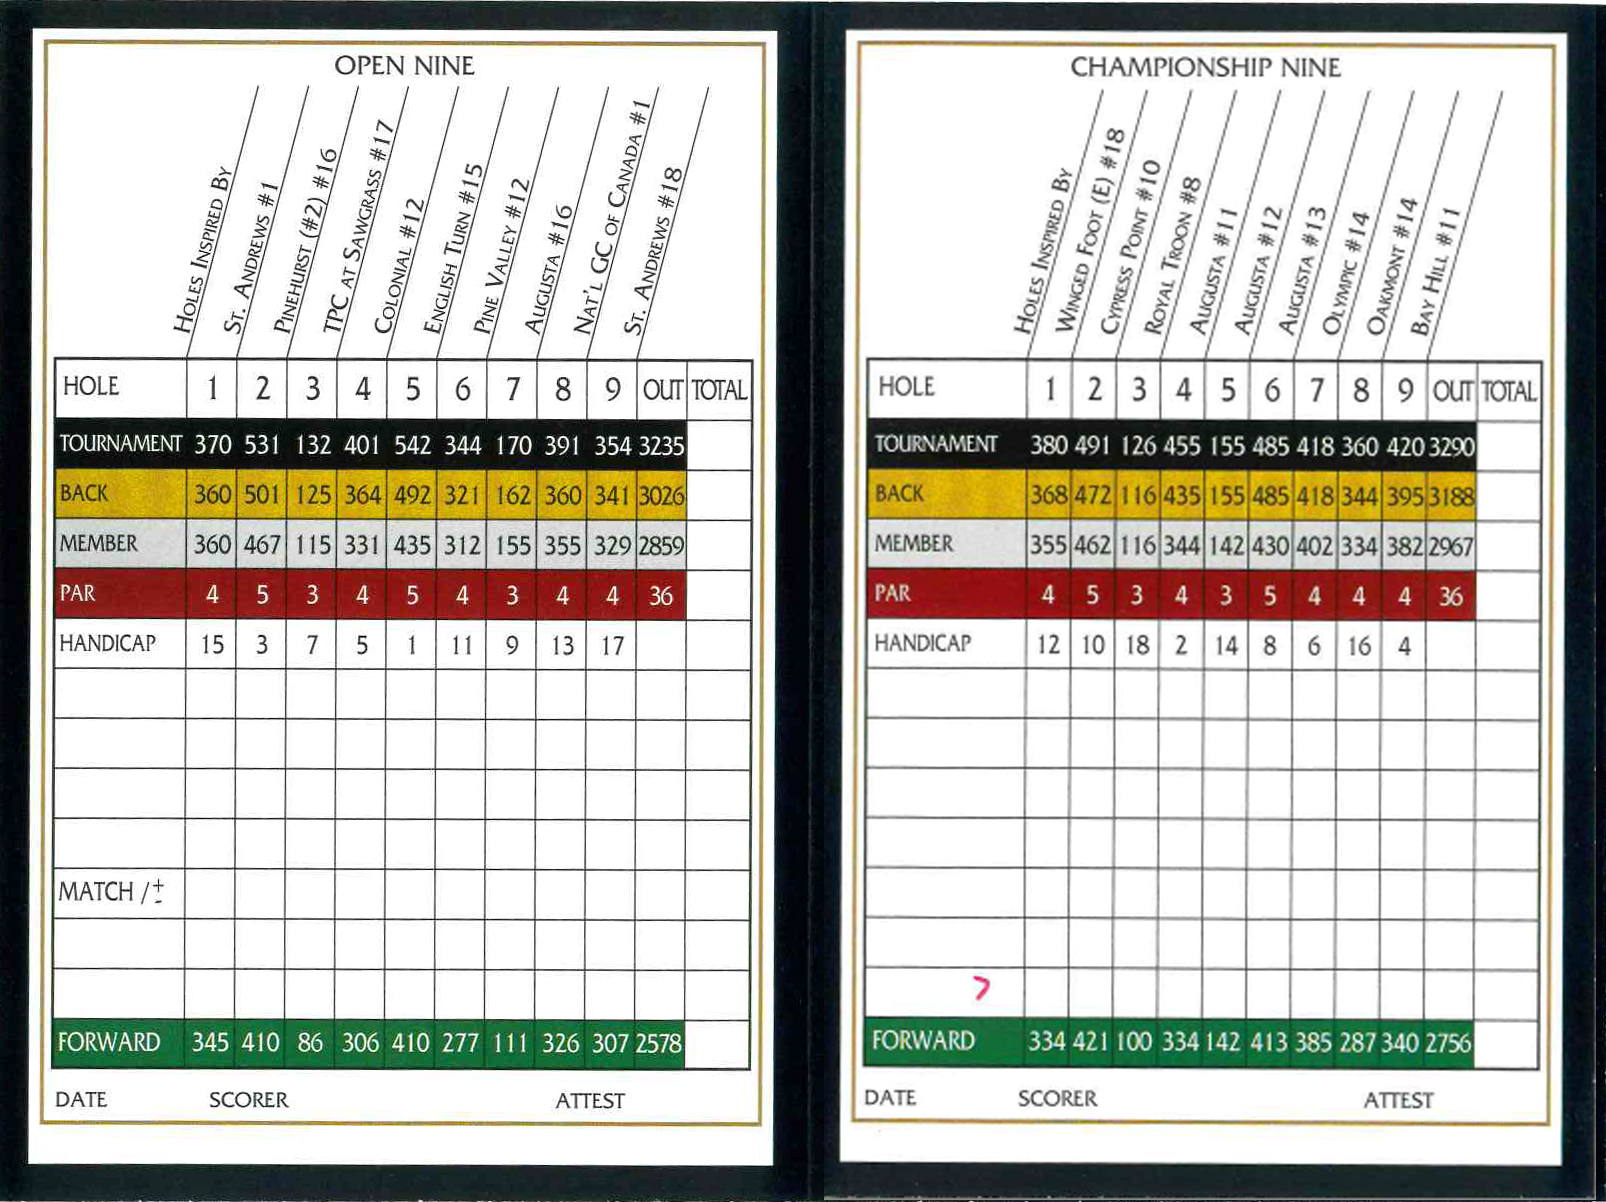 world tour golf course scorecard